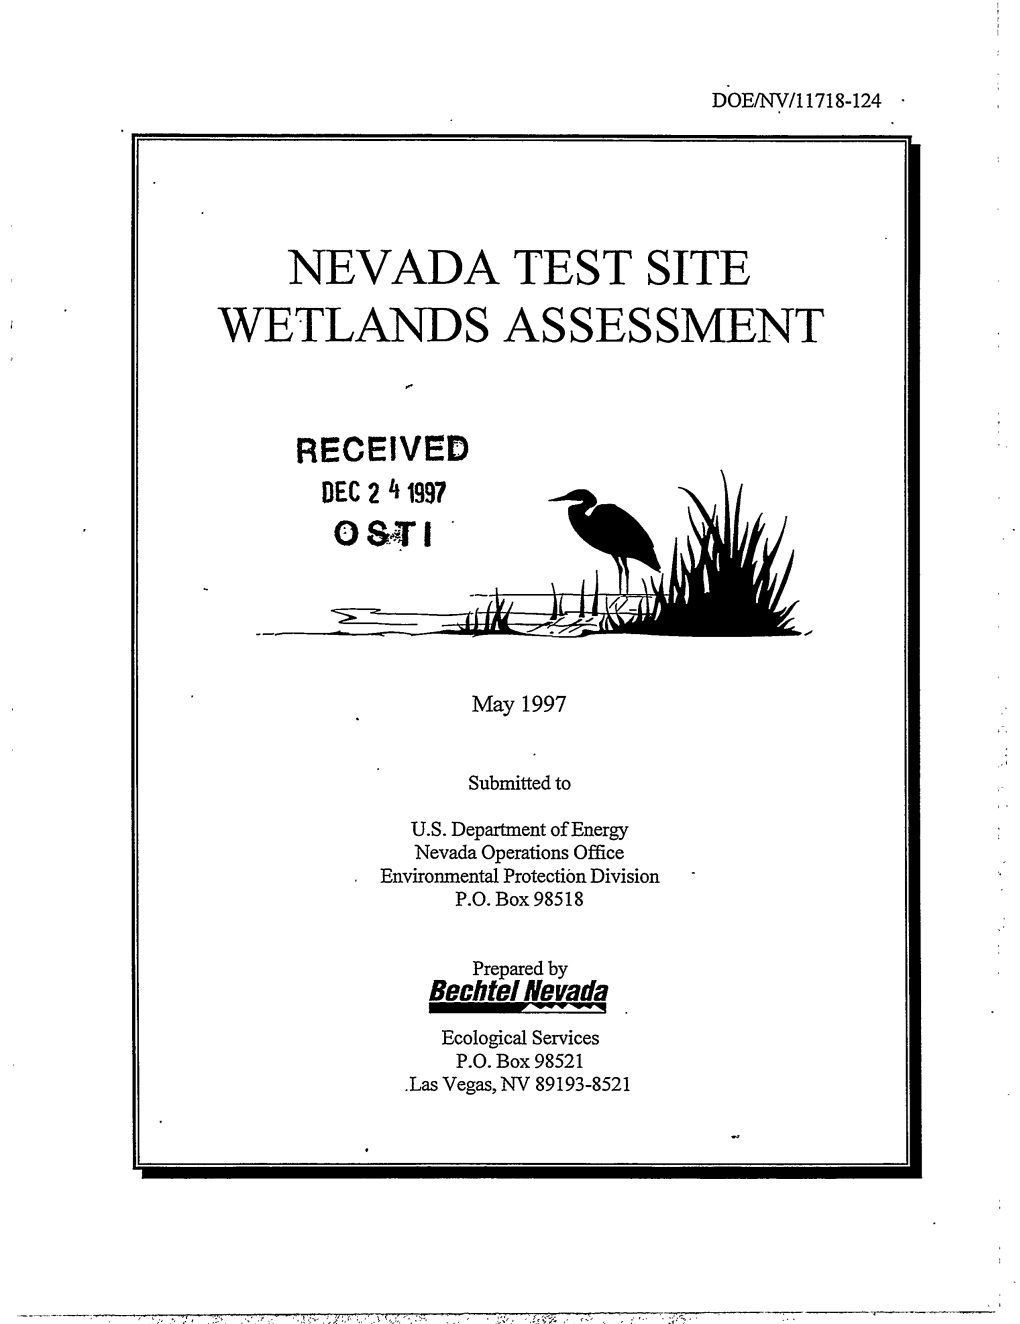 Nevada Test Site Wetlands Assessment